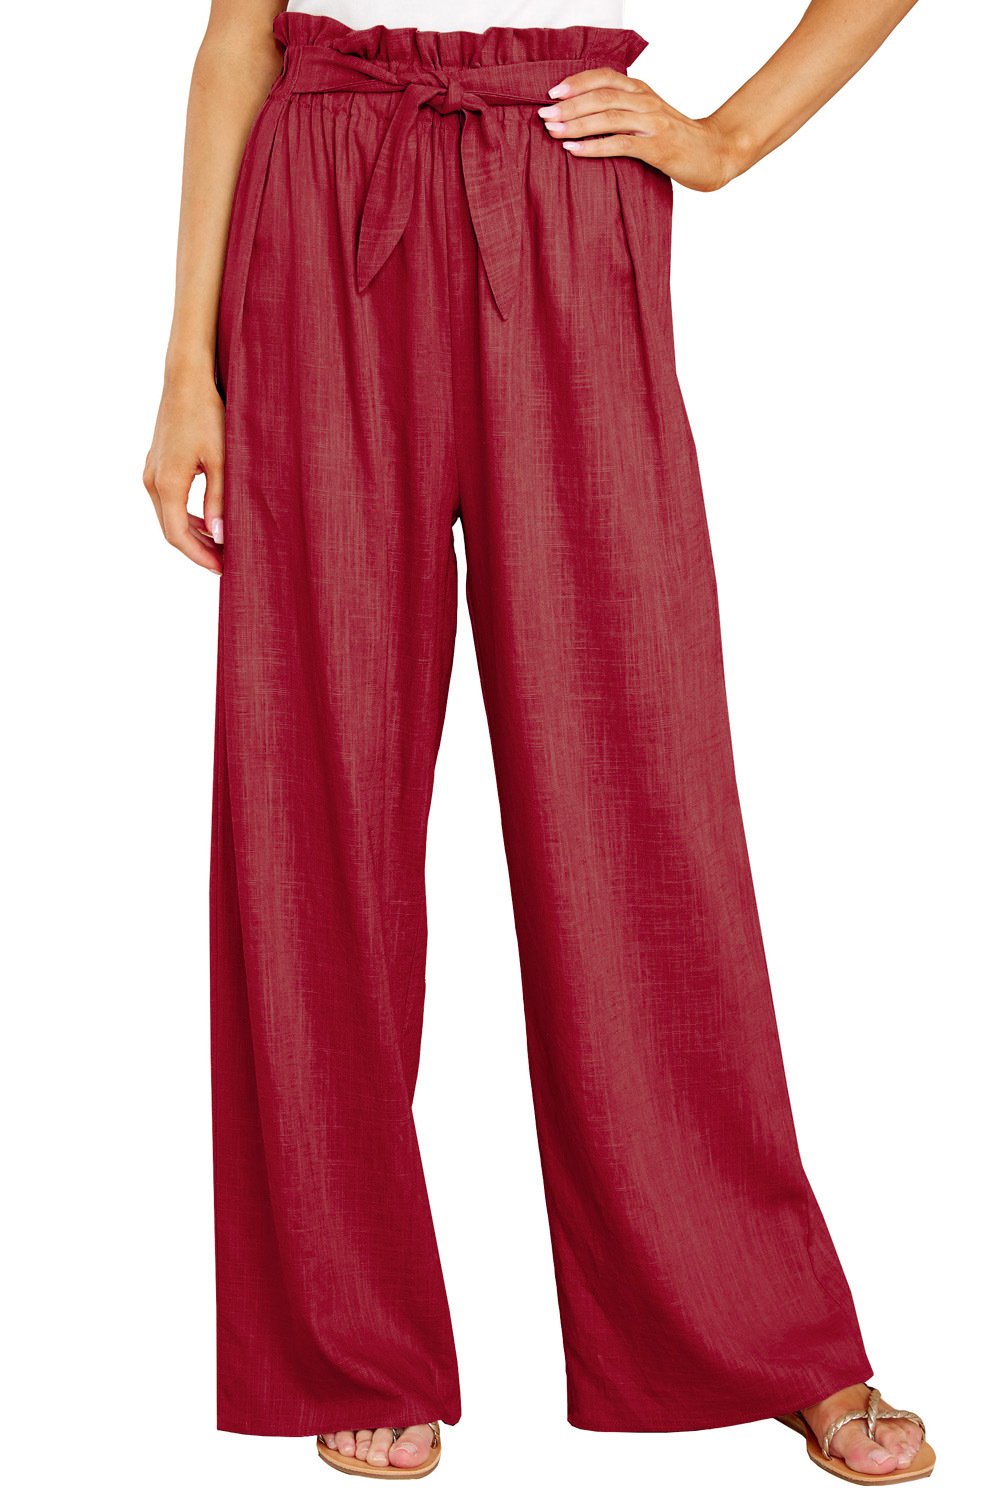 Casual Women Linen Long Pants-Women Bottoms-Wine Red-S-Free Shipping Leatheretro